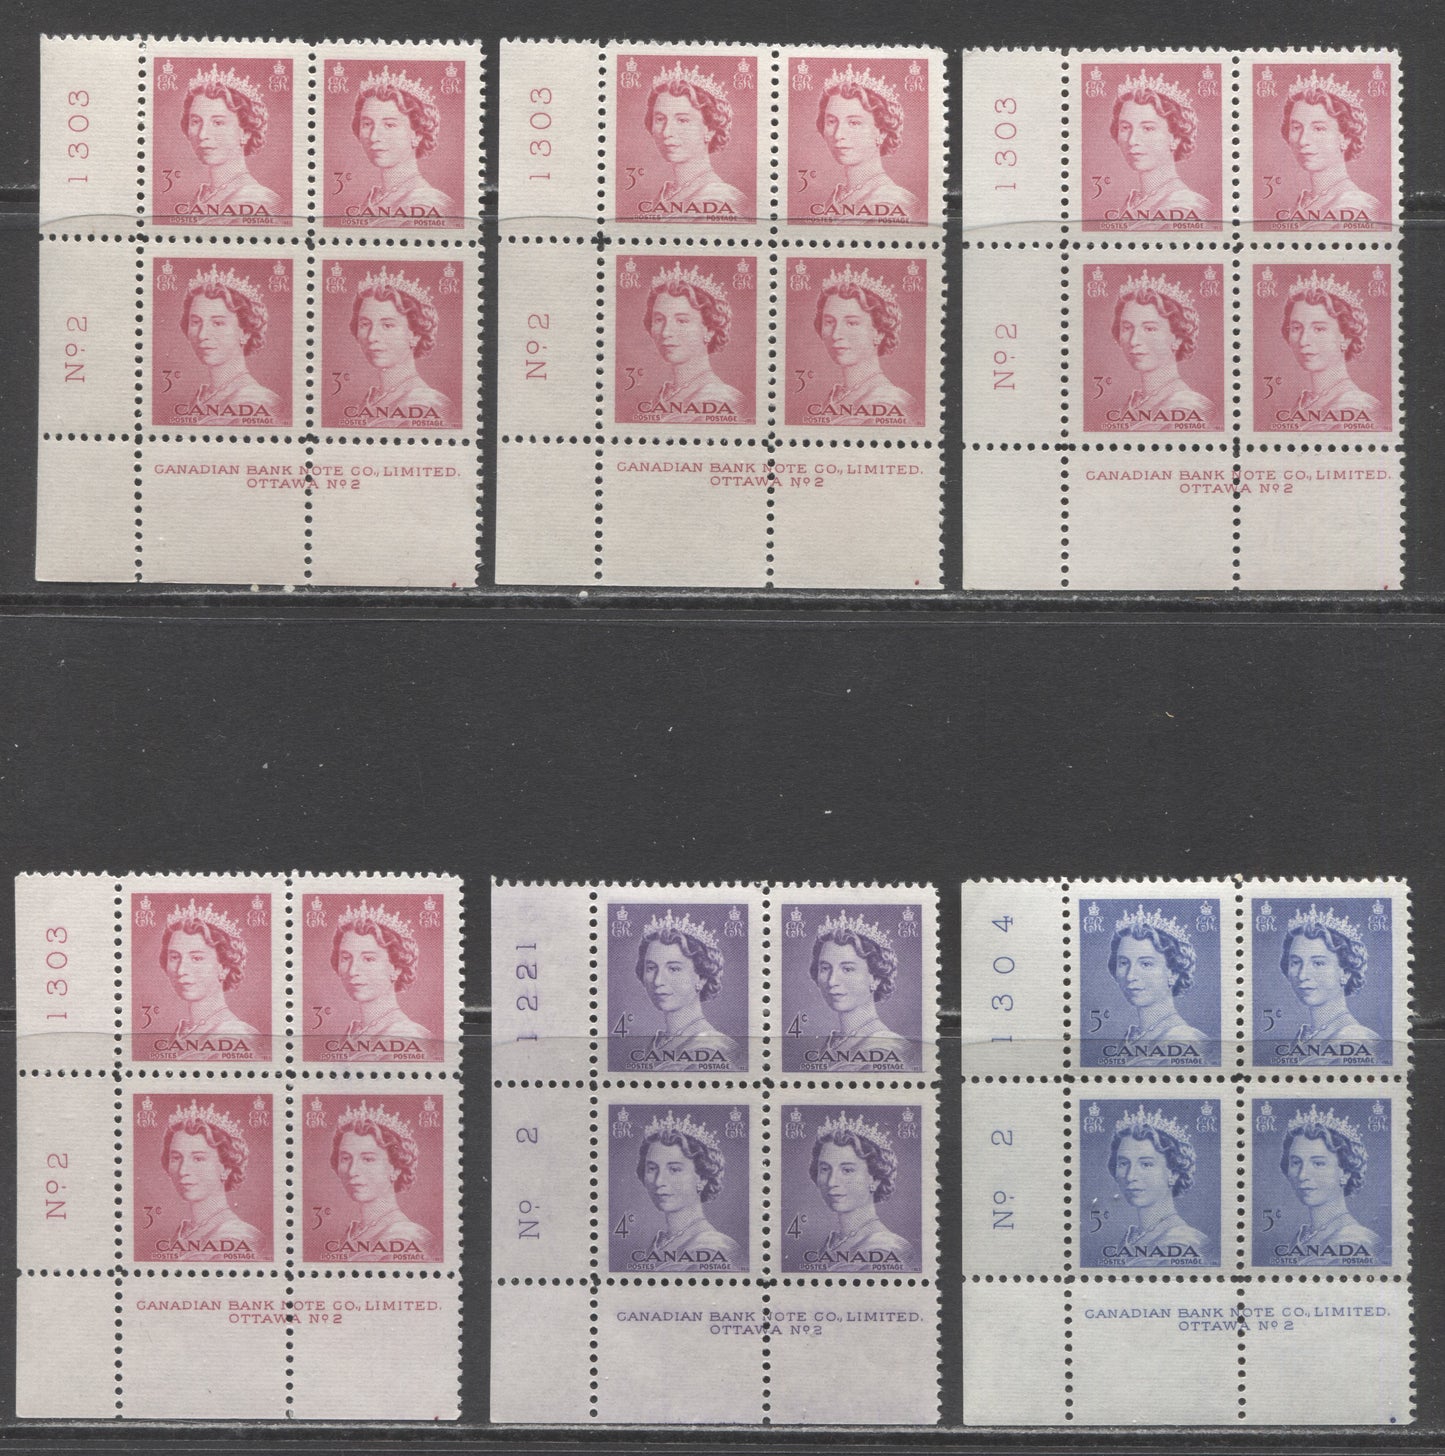 Lot 255 Canada #327-329 3c-5c Cerise, Violet & Ultramarine Queen Elizabeth II, 1953-1954 Karsh Issue, 6 FNH & VFNH LL Plate 2 Inscription Blocks, Various Shades, Different Perfs